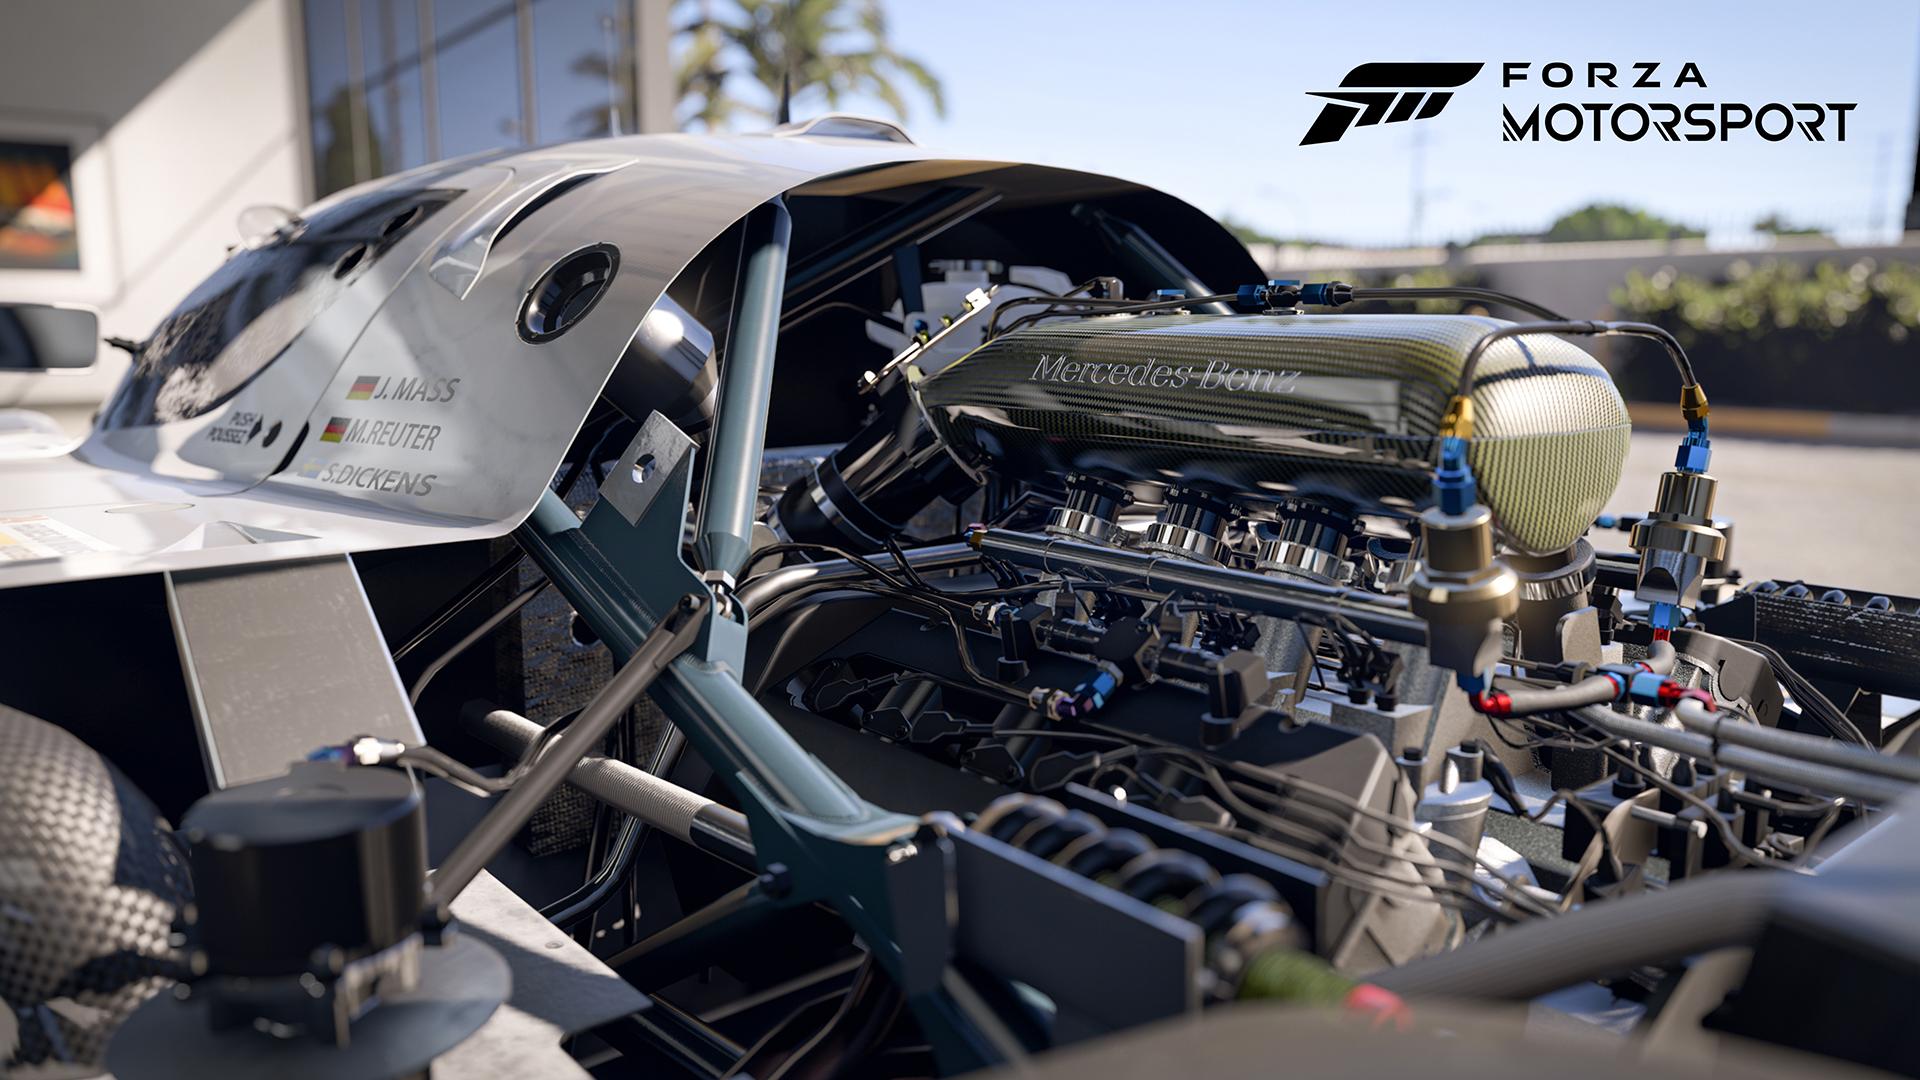 Forza Motorsport steering wheel support list released